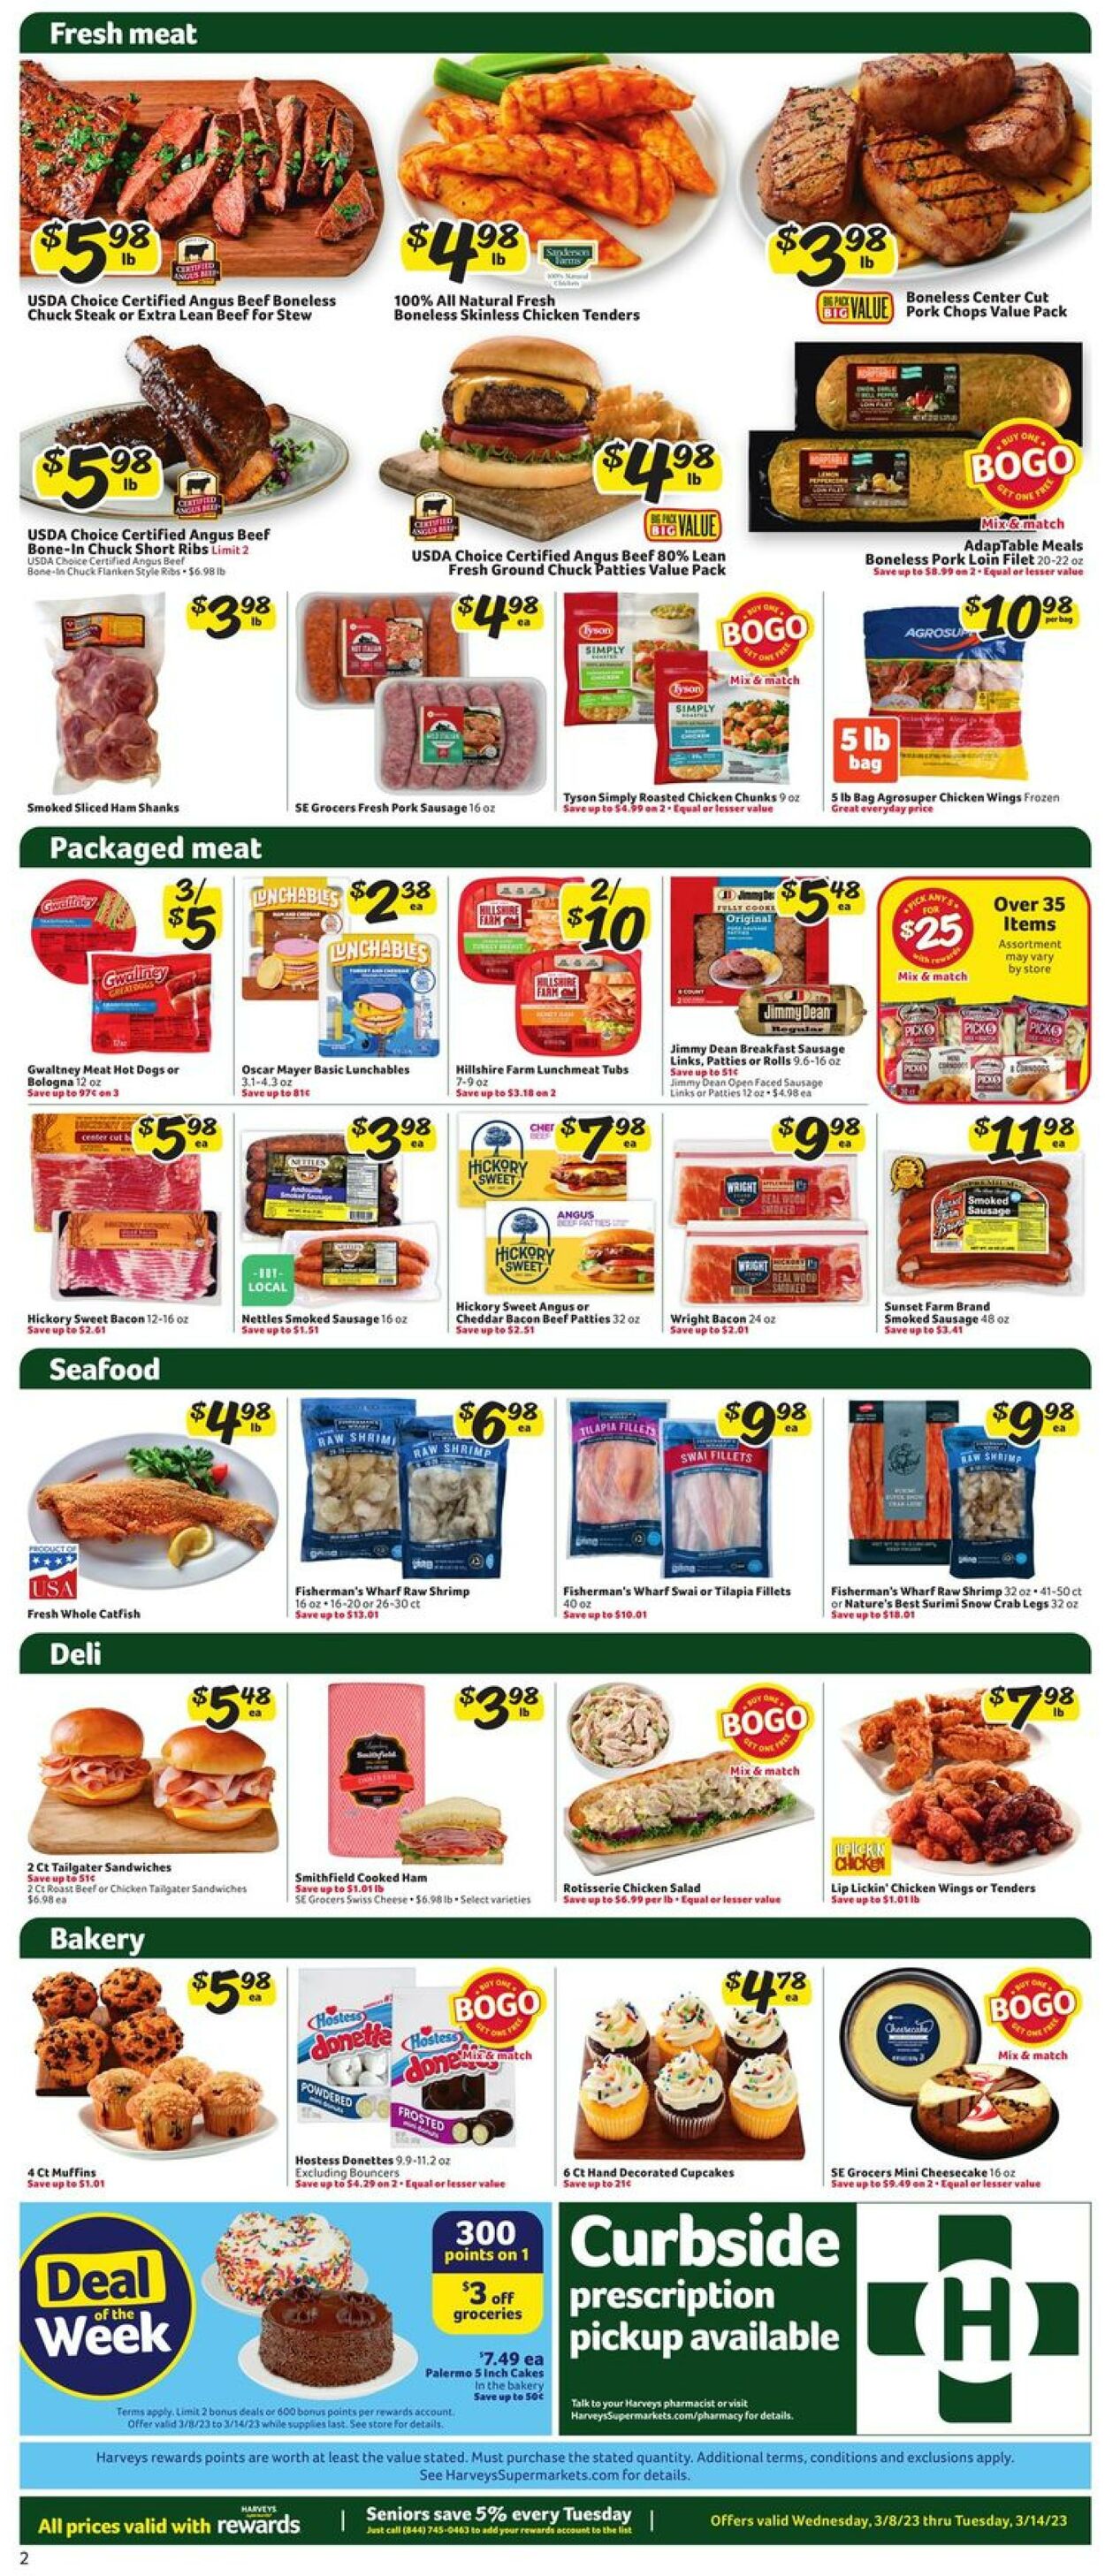 Weekly ad Harvey's Supermarkets 03/08/2023 - 03/14/2023